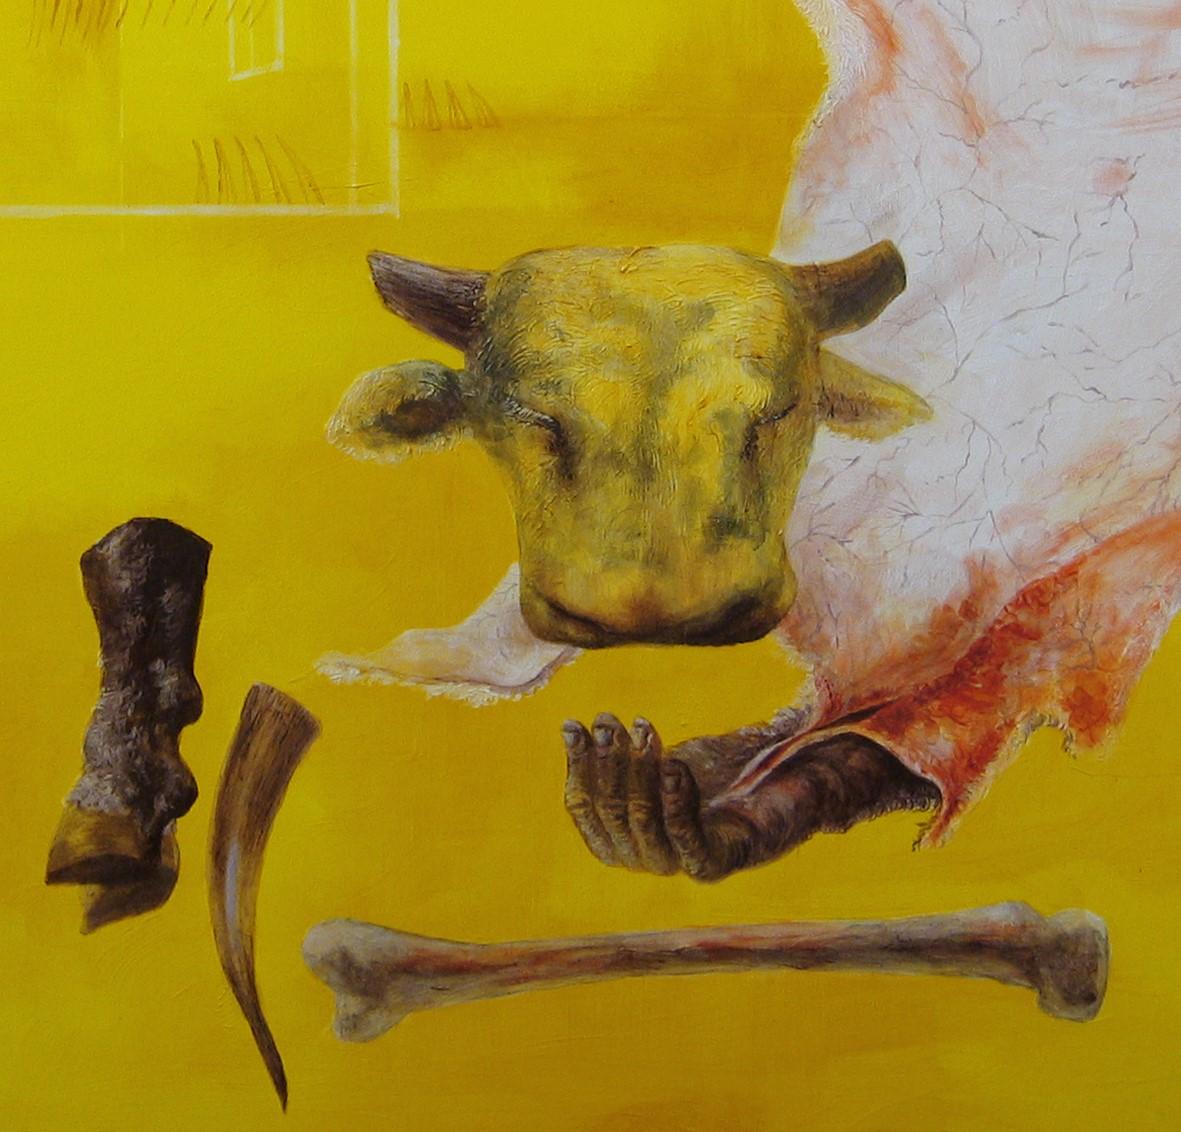 Earth's Skin - 21st Century, Yellow, Figurative Art, Animal, Myth, Contemporary - Painting by Alexandru Rădvan